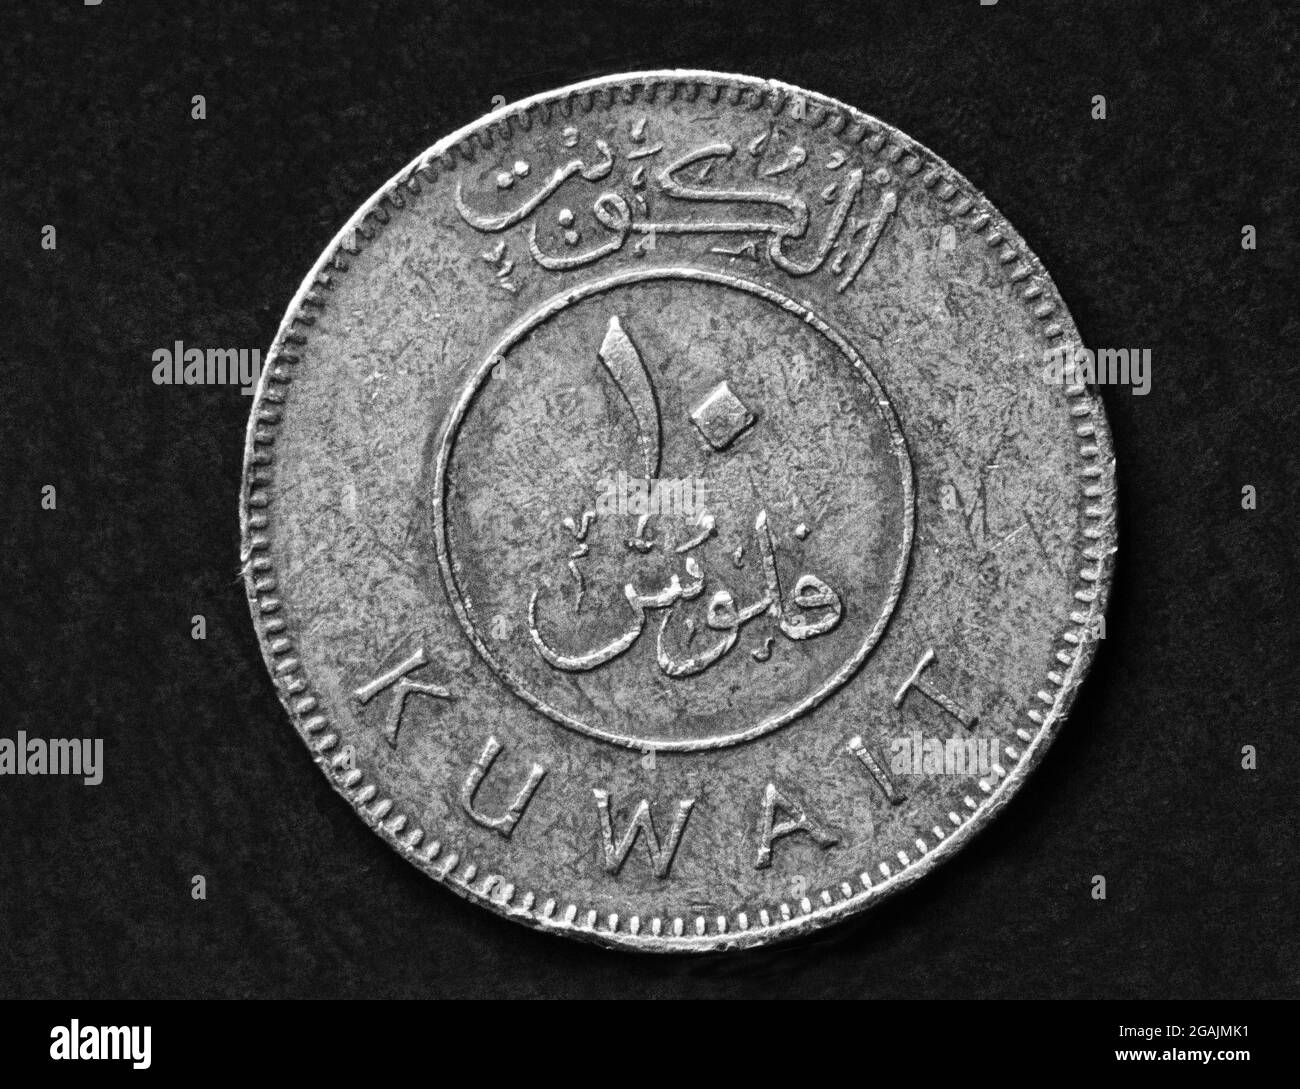 Fotomünzen Kuwait, 1 fils, 1961 Stockfoto